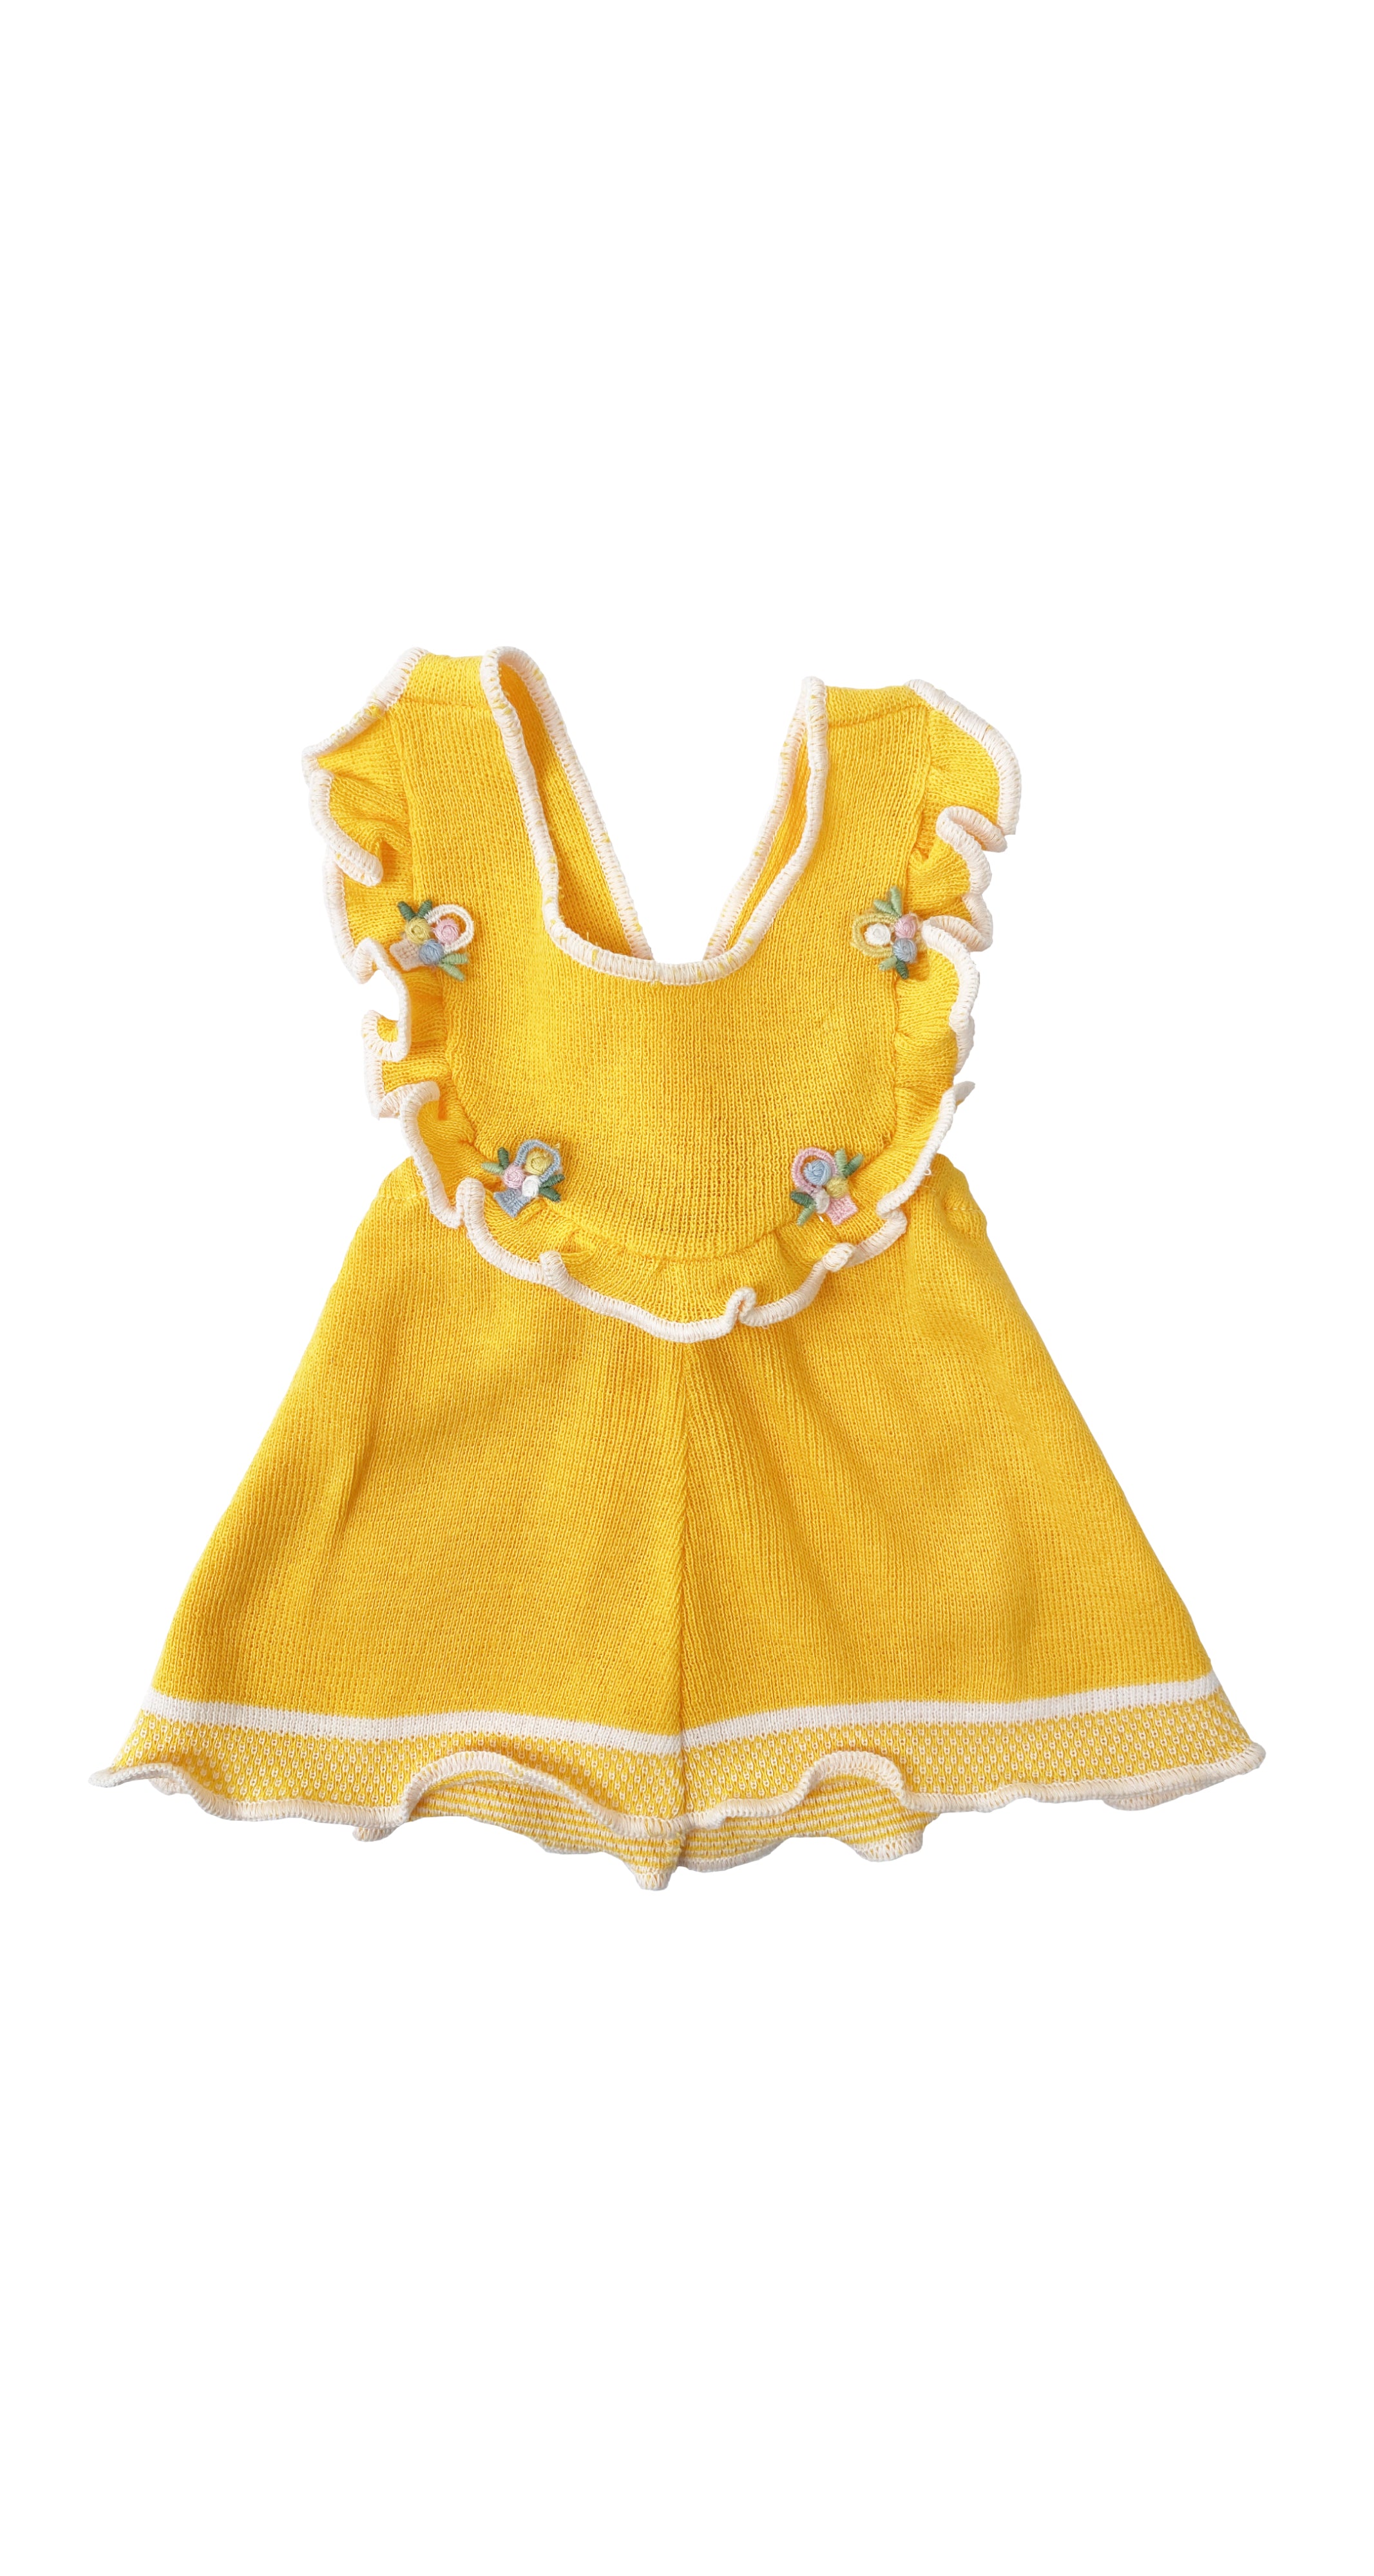 1970s NOS Girl's Ruffle Bib Yellow Knit Dress